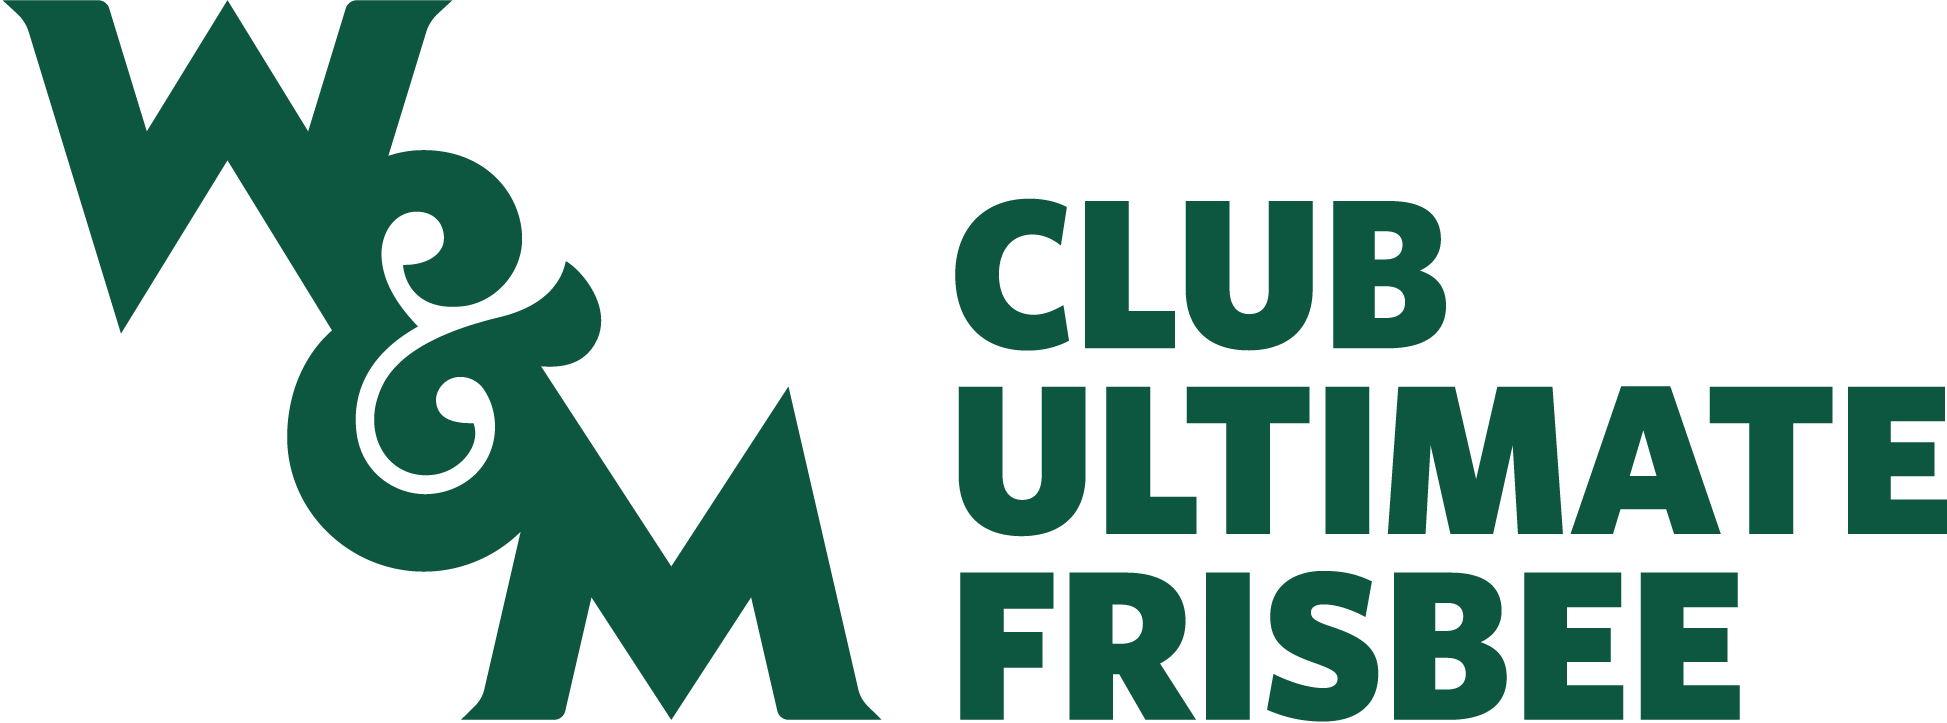 ultimate-frisbee-logo